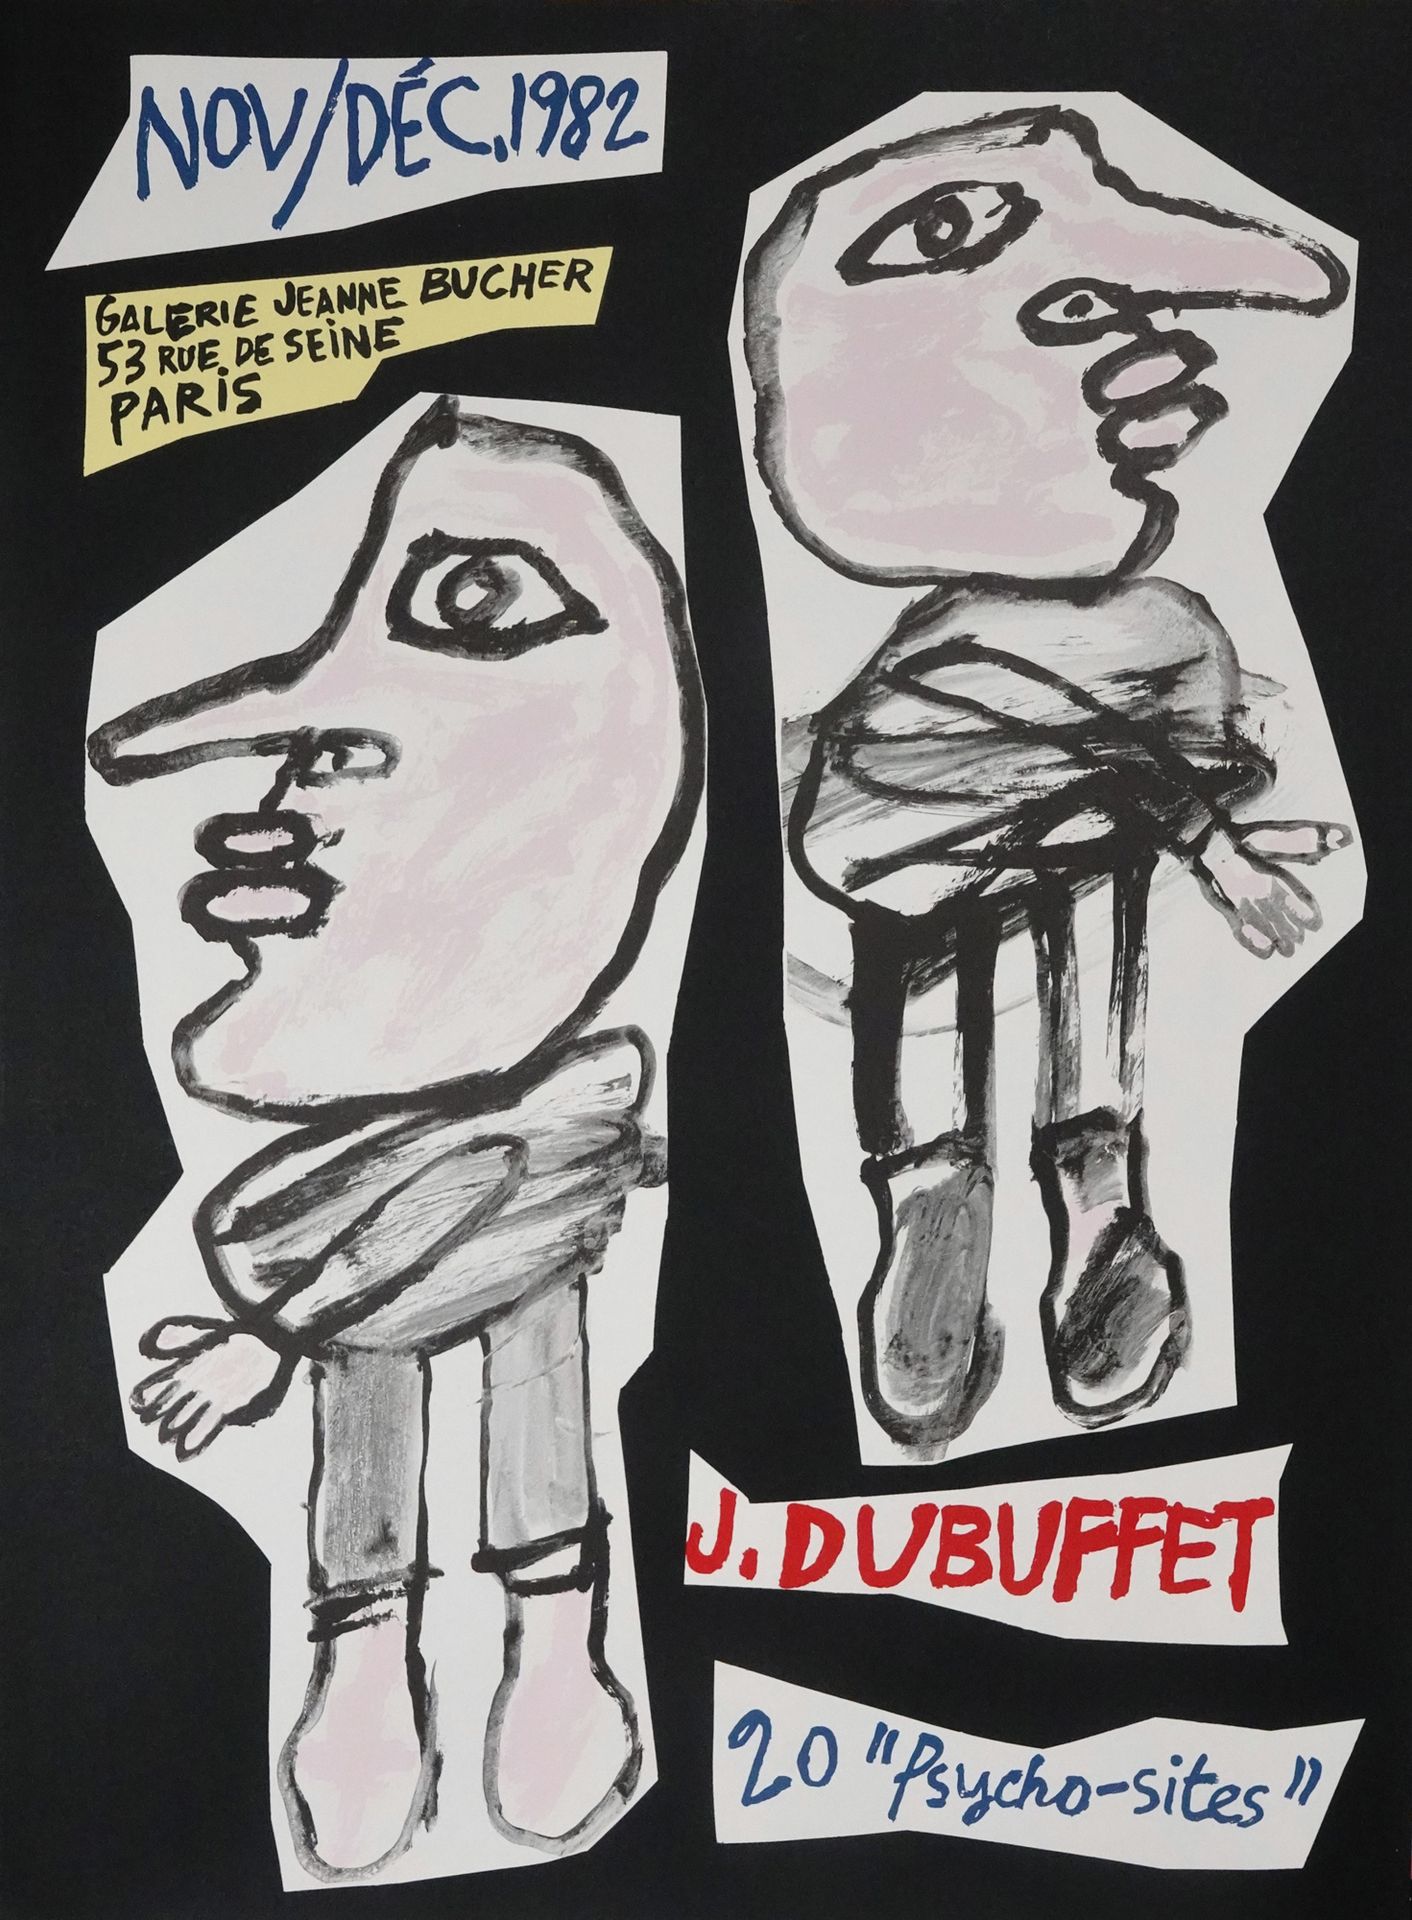 Jean DUBUFFET (1901-1985), d'après 20 Psycho-sites, 1982
Poster for an exhibitio&hellip;